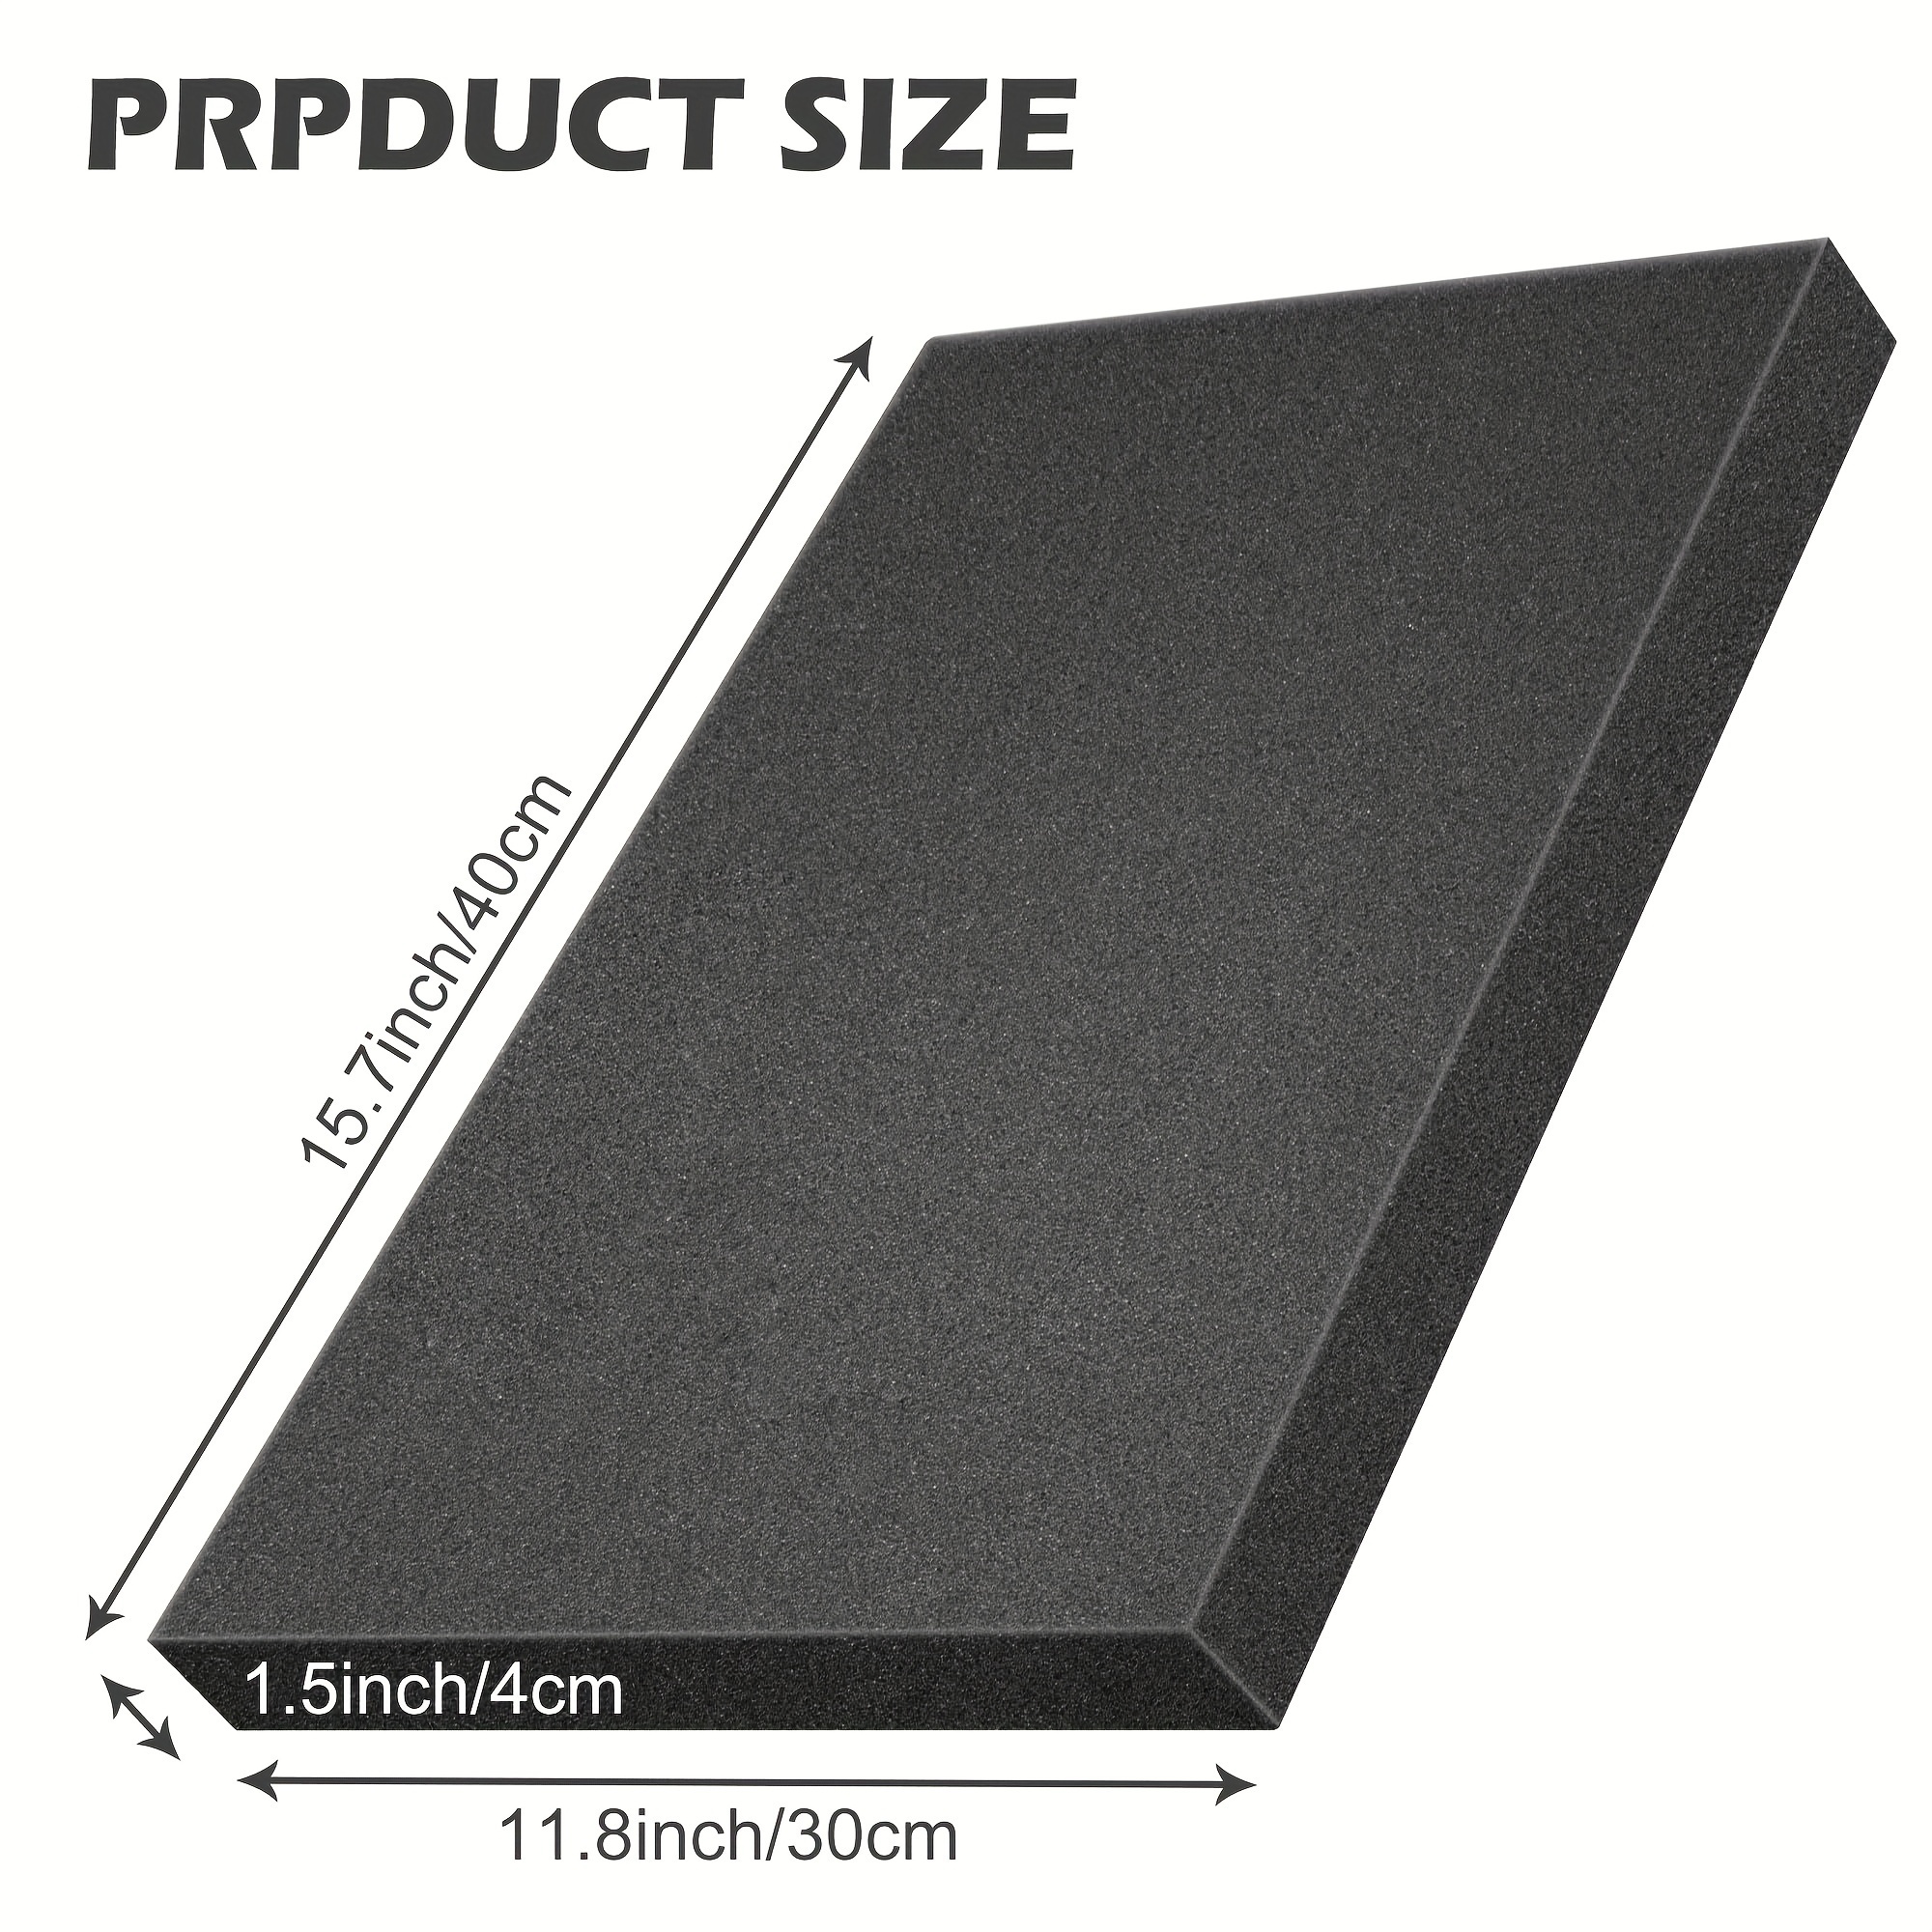 8 Pcs Packing Foam Sheets Customizable Polyurethane Foam Pad 0.5